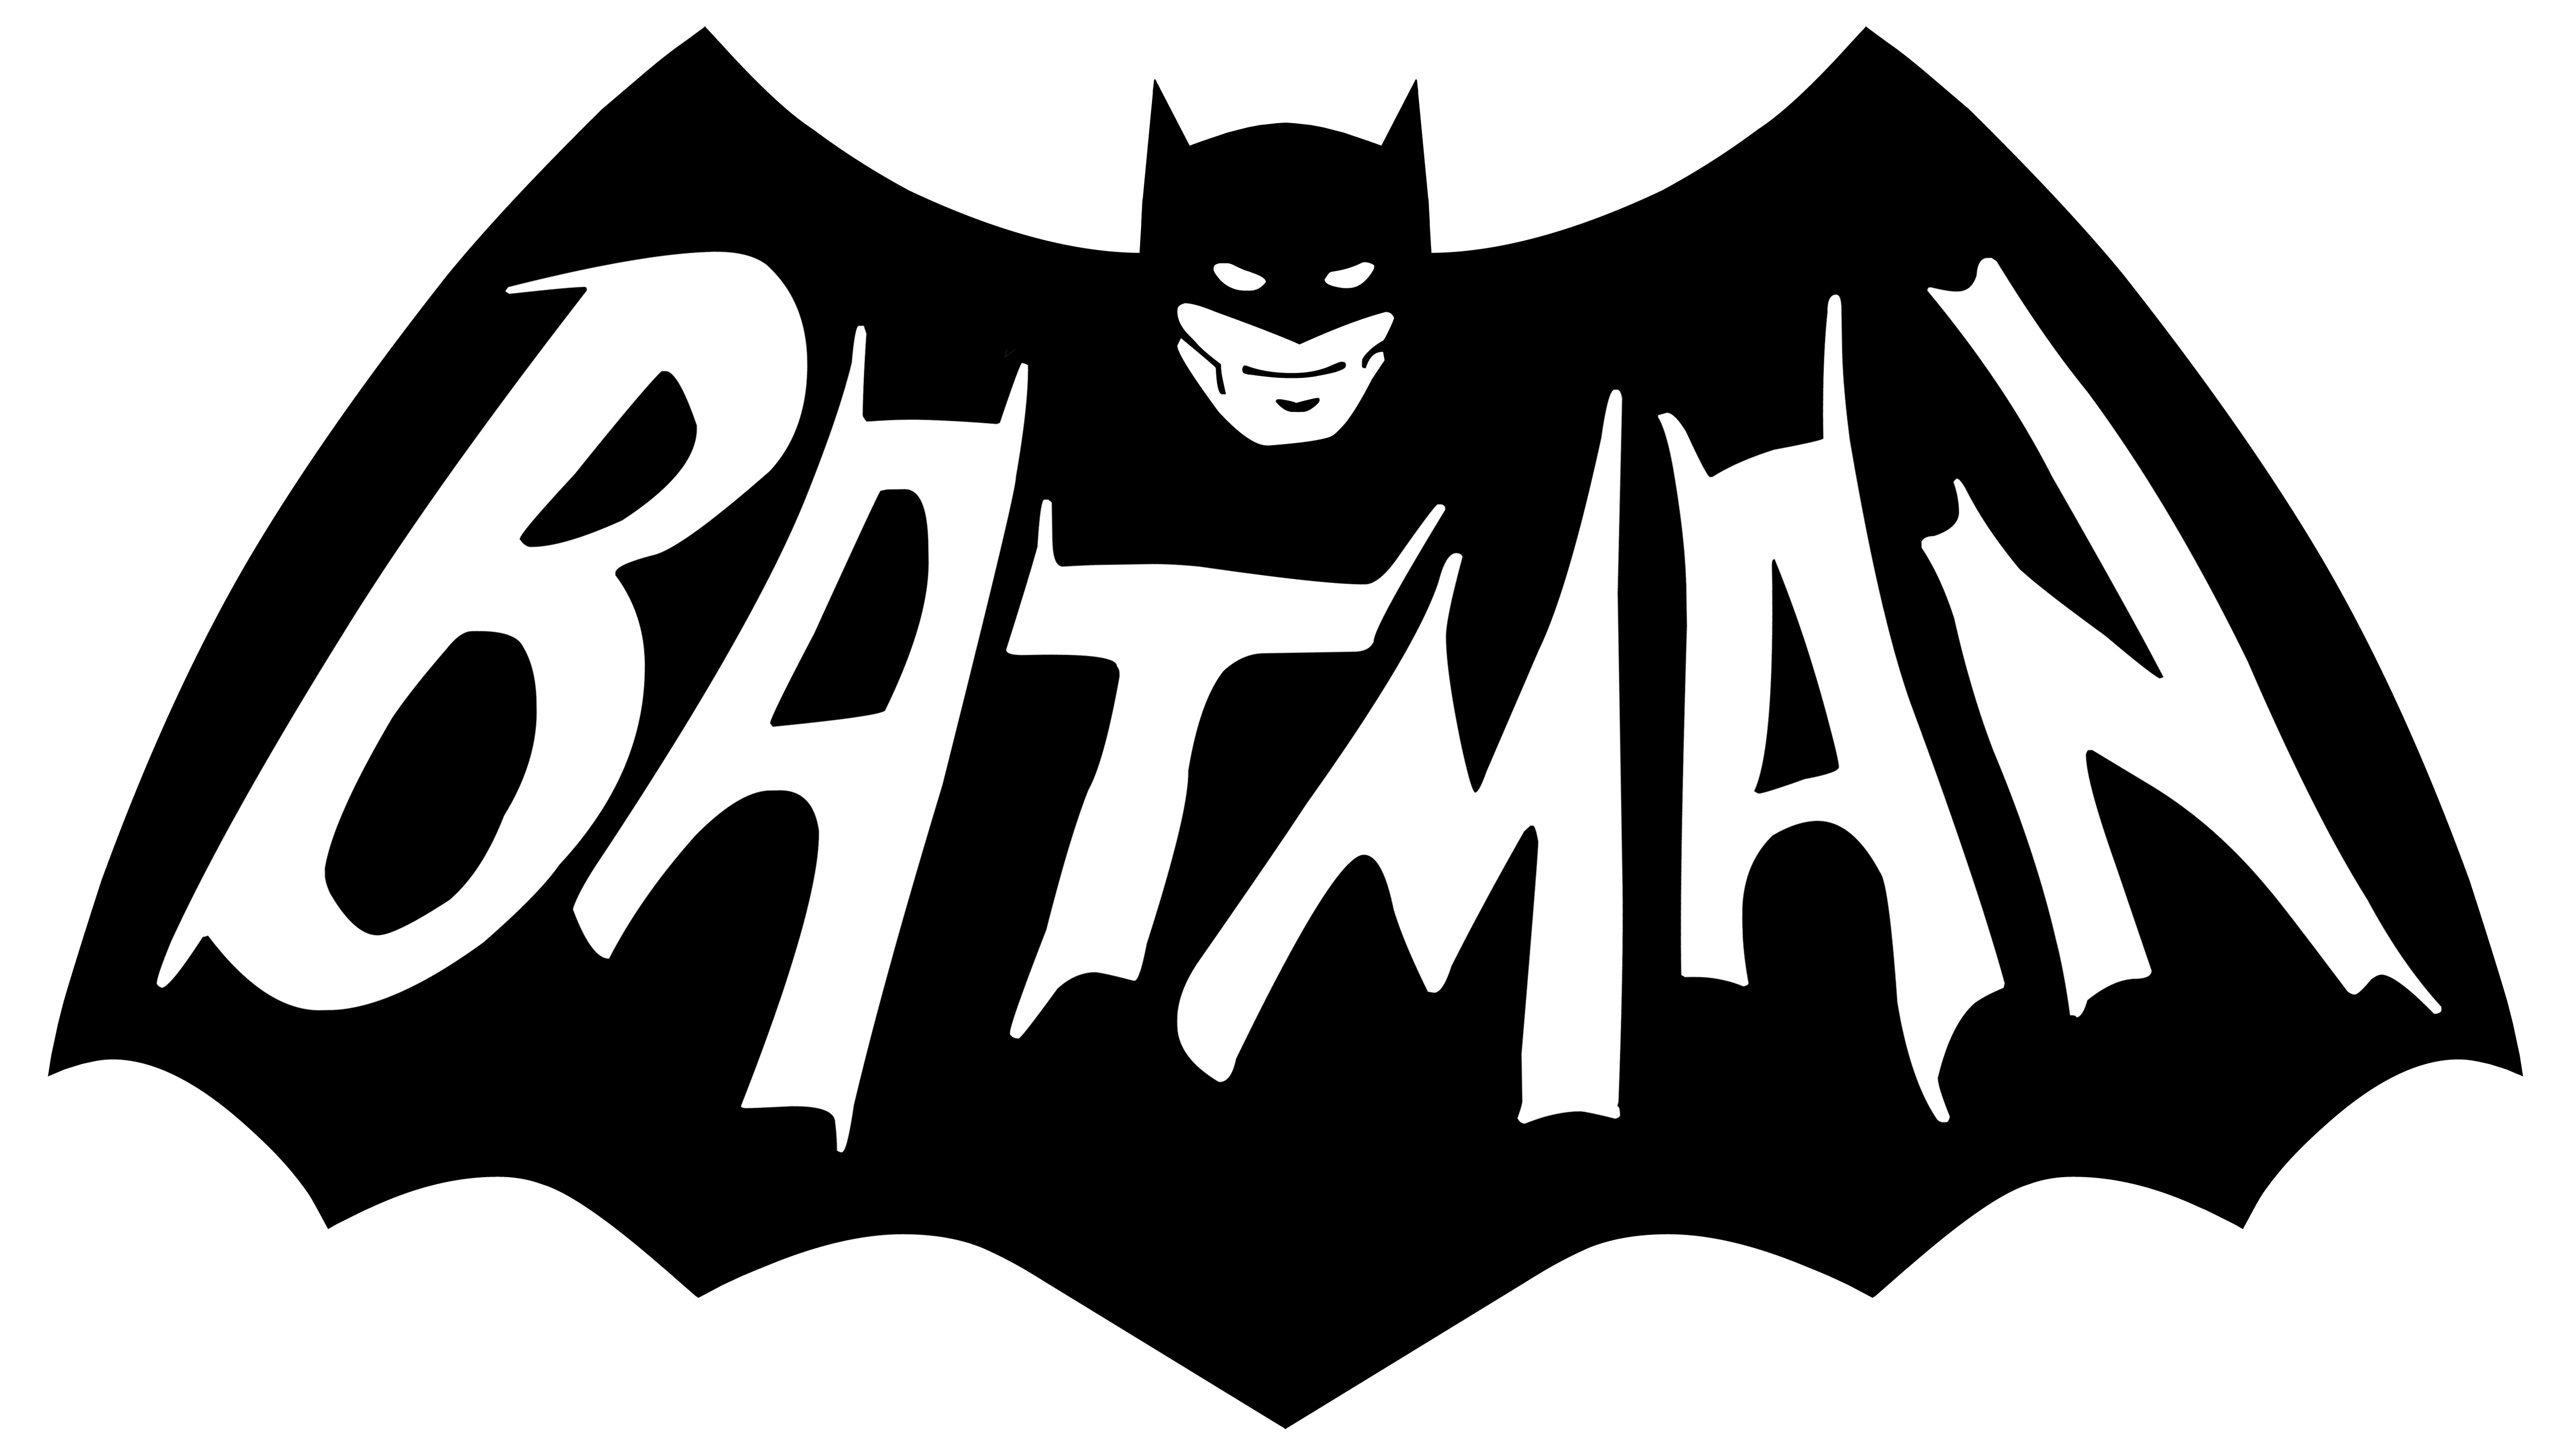 Batman Black and White Symbol - The Iconic Emblem of the Dark Knight